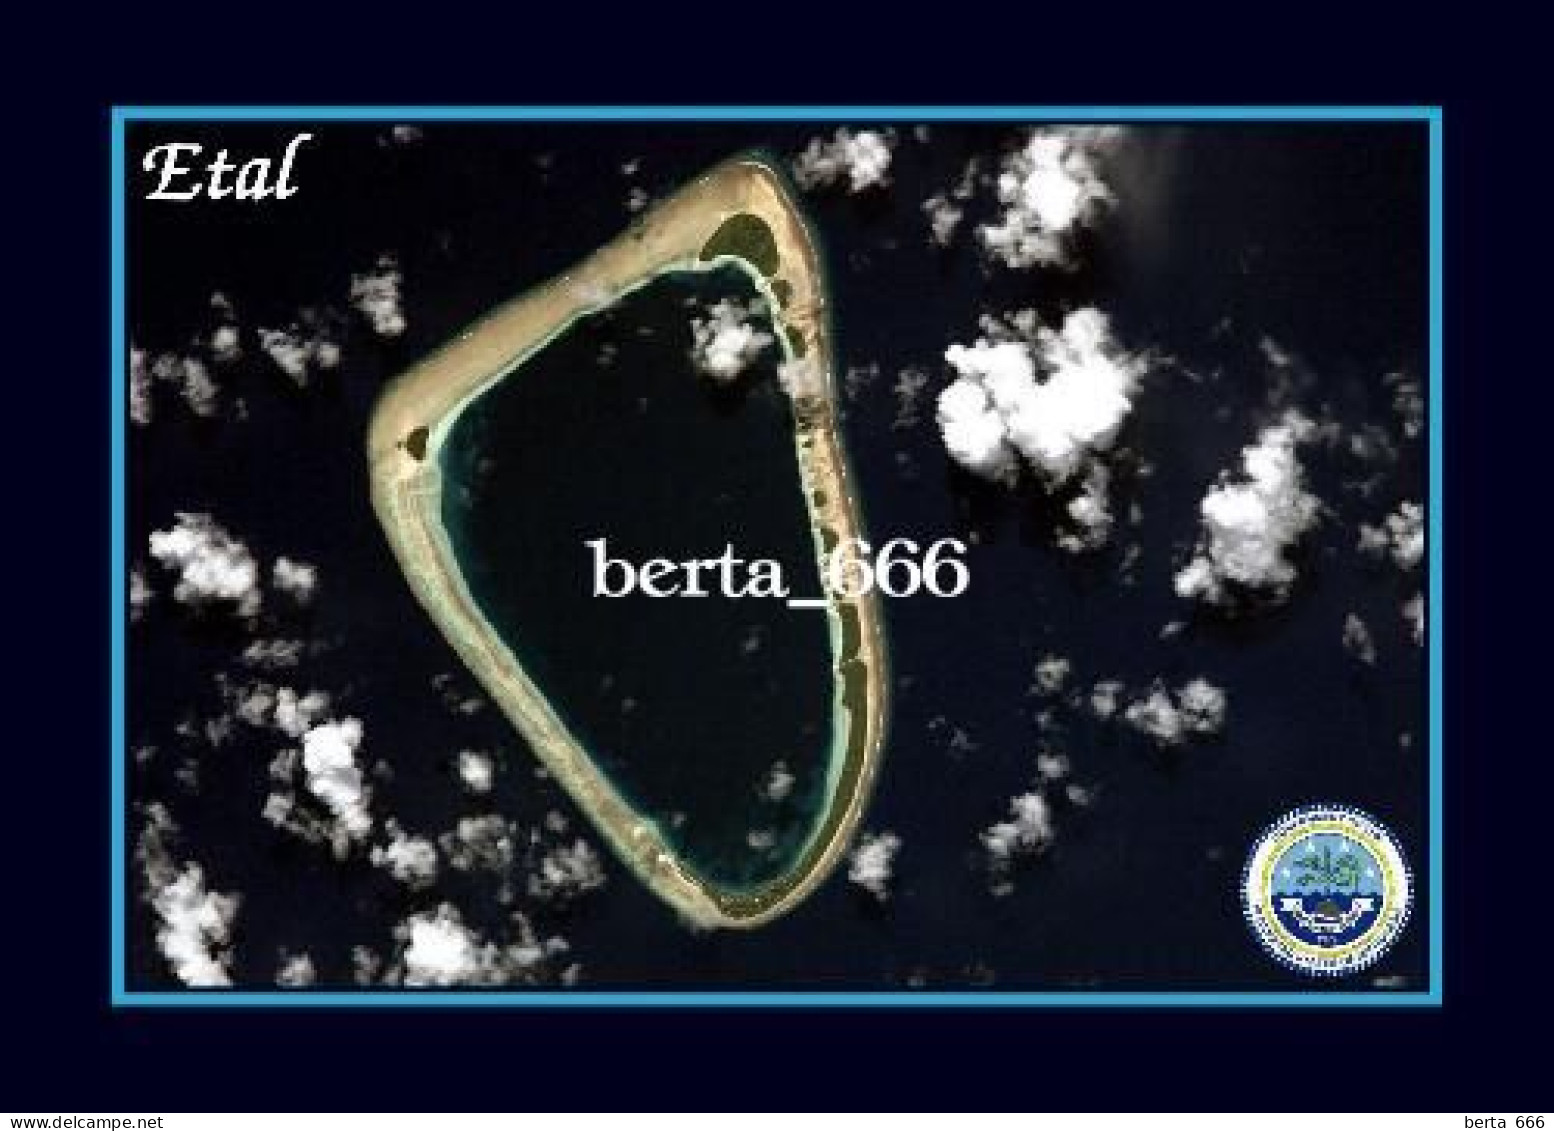 Micronesia Caroline Islands Etal Atoll New Postcard - Micronesië